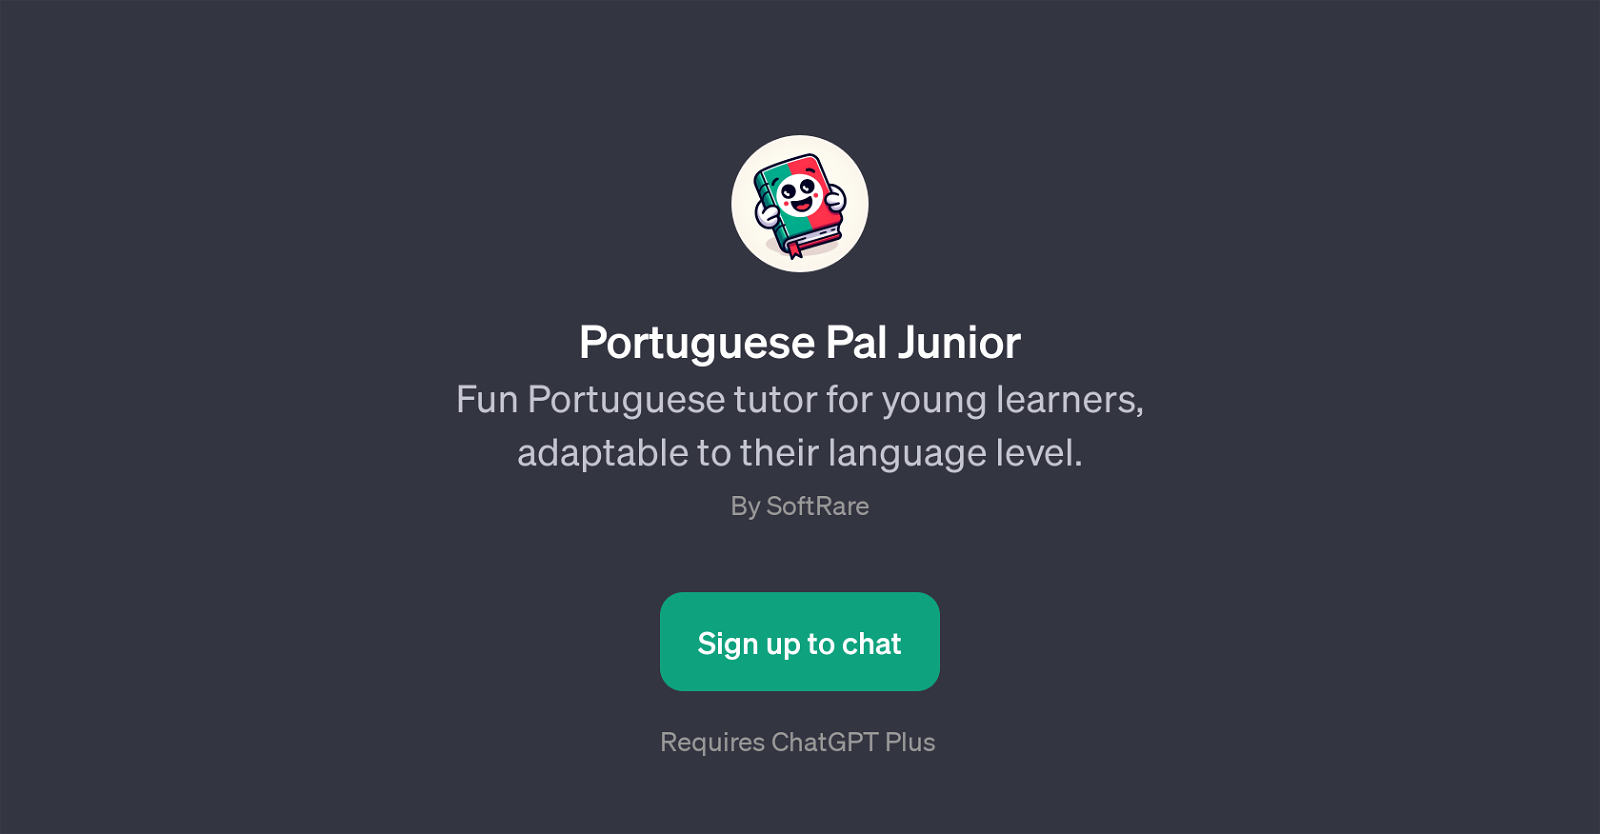 Portuguese Pal Junior website